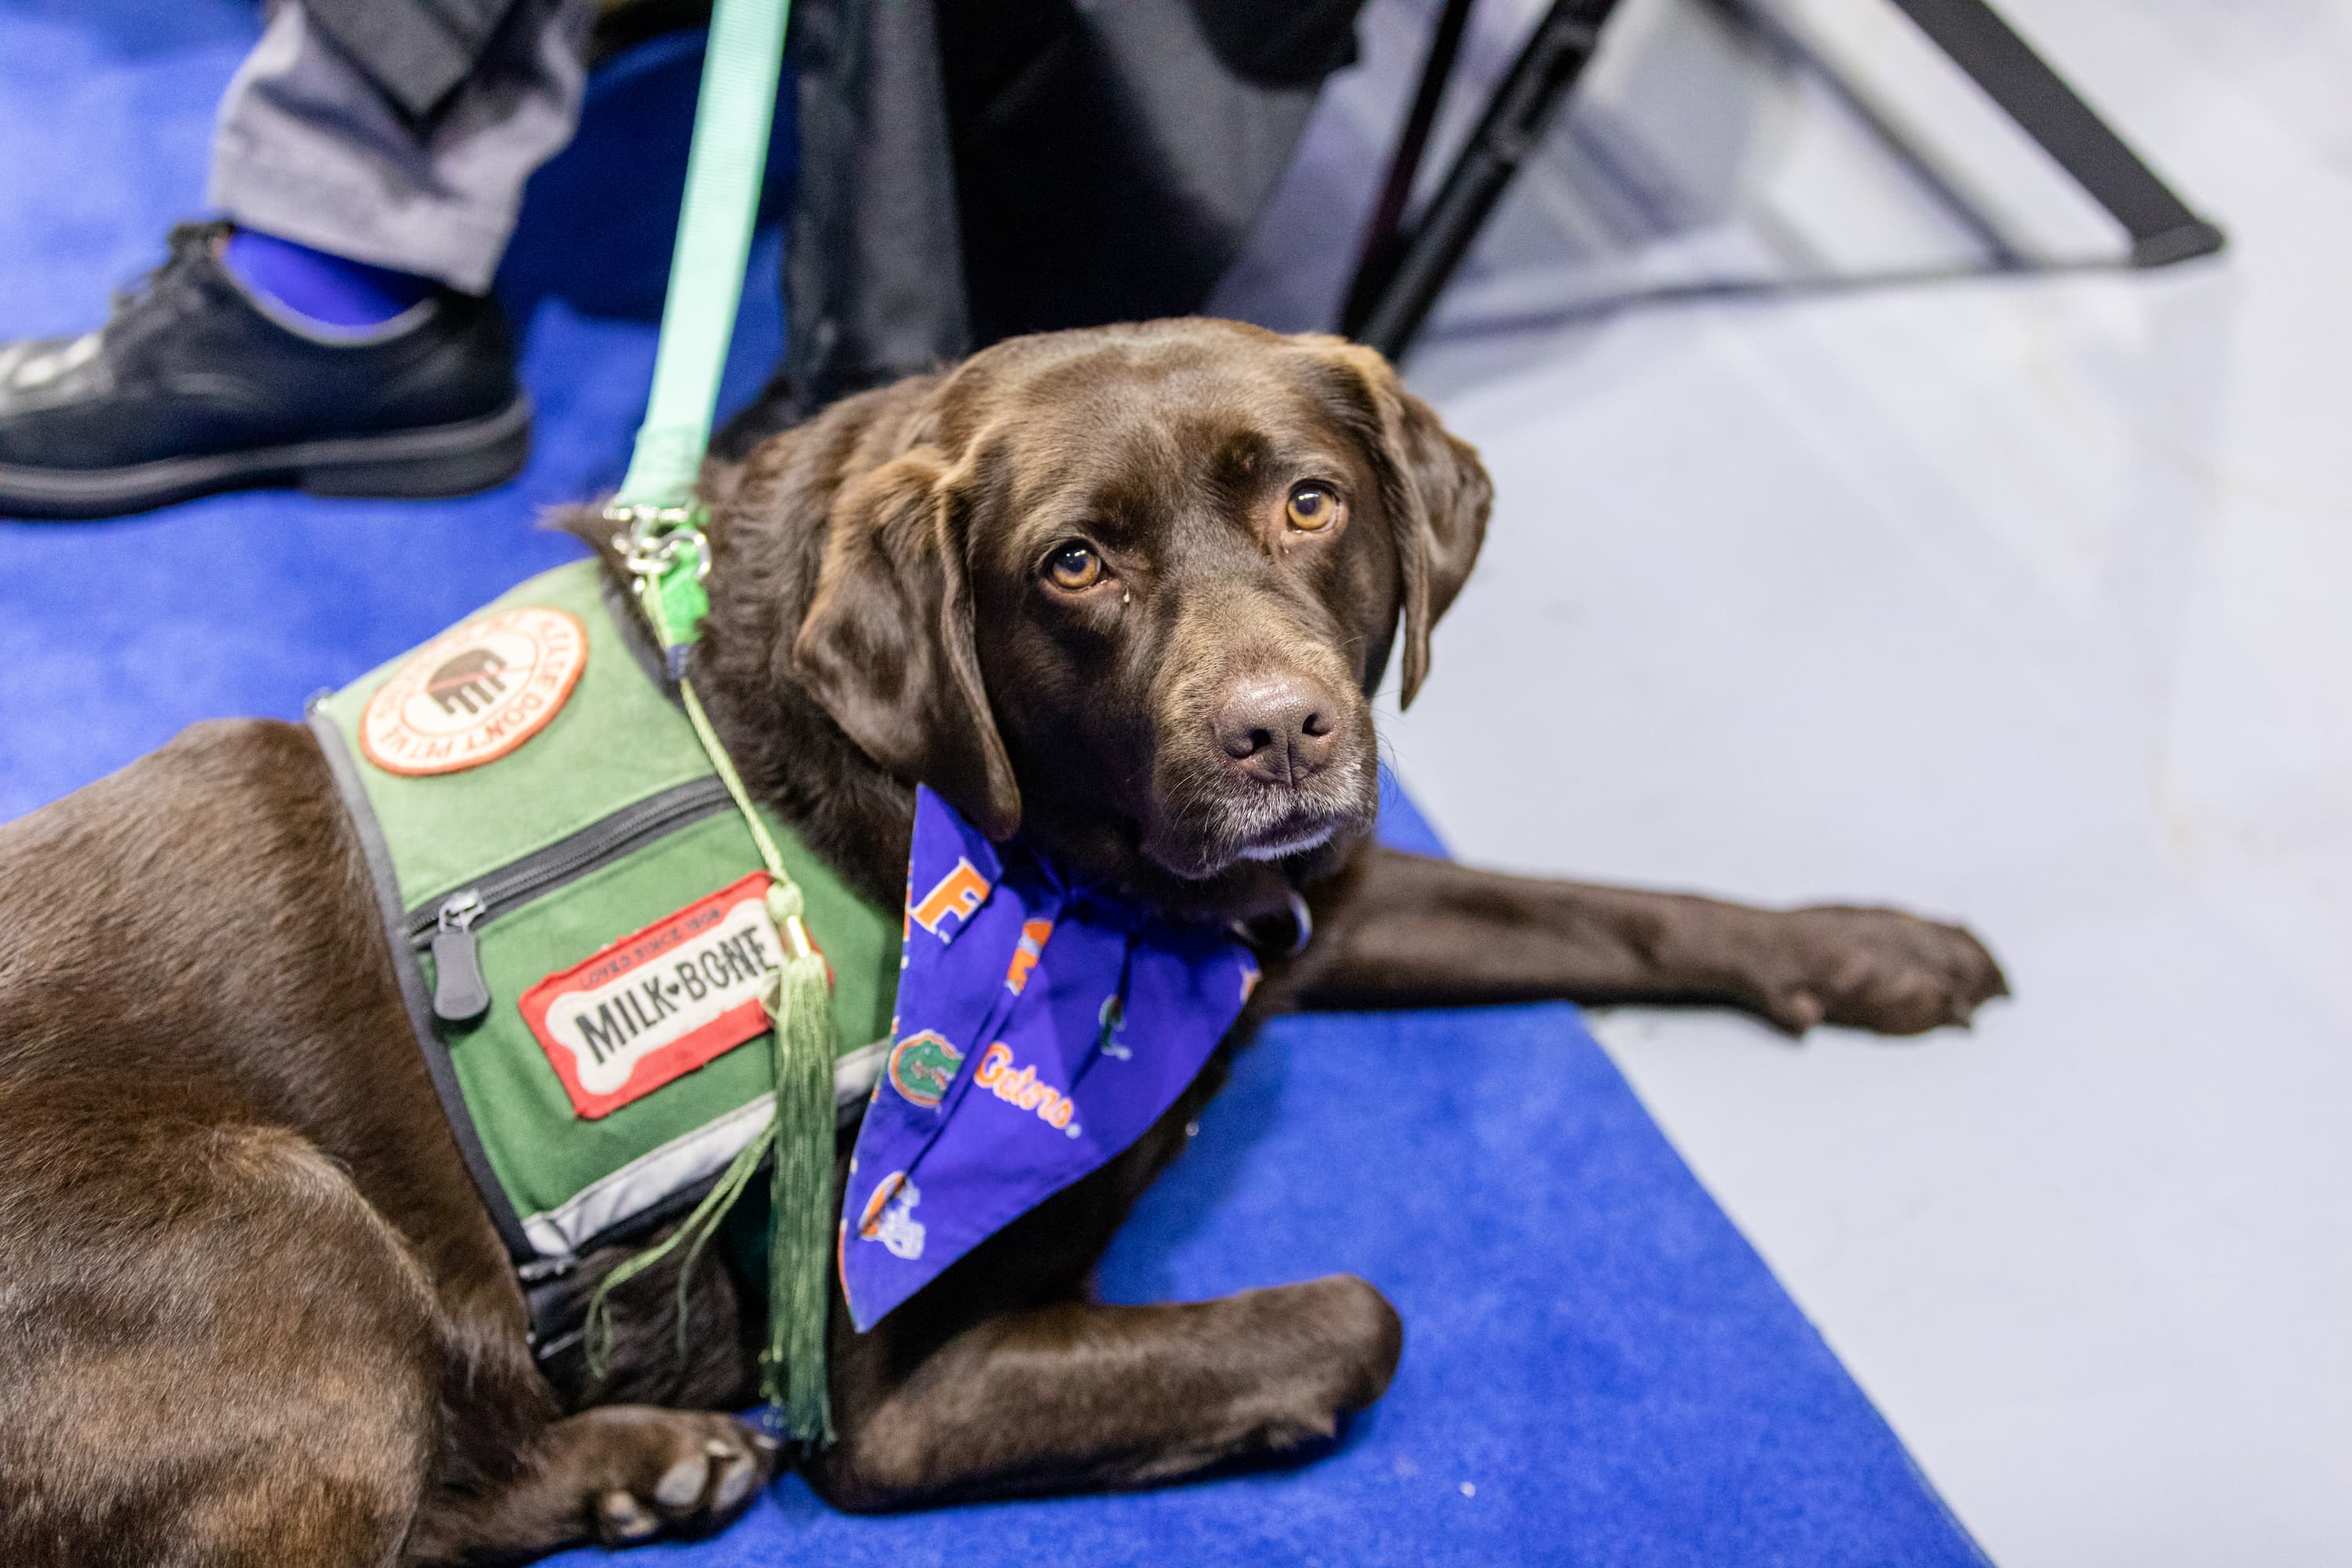 A chocolate labrador retriever in a green service dog vest lies on a blue rug